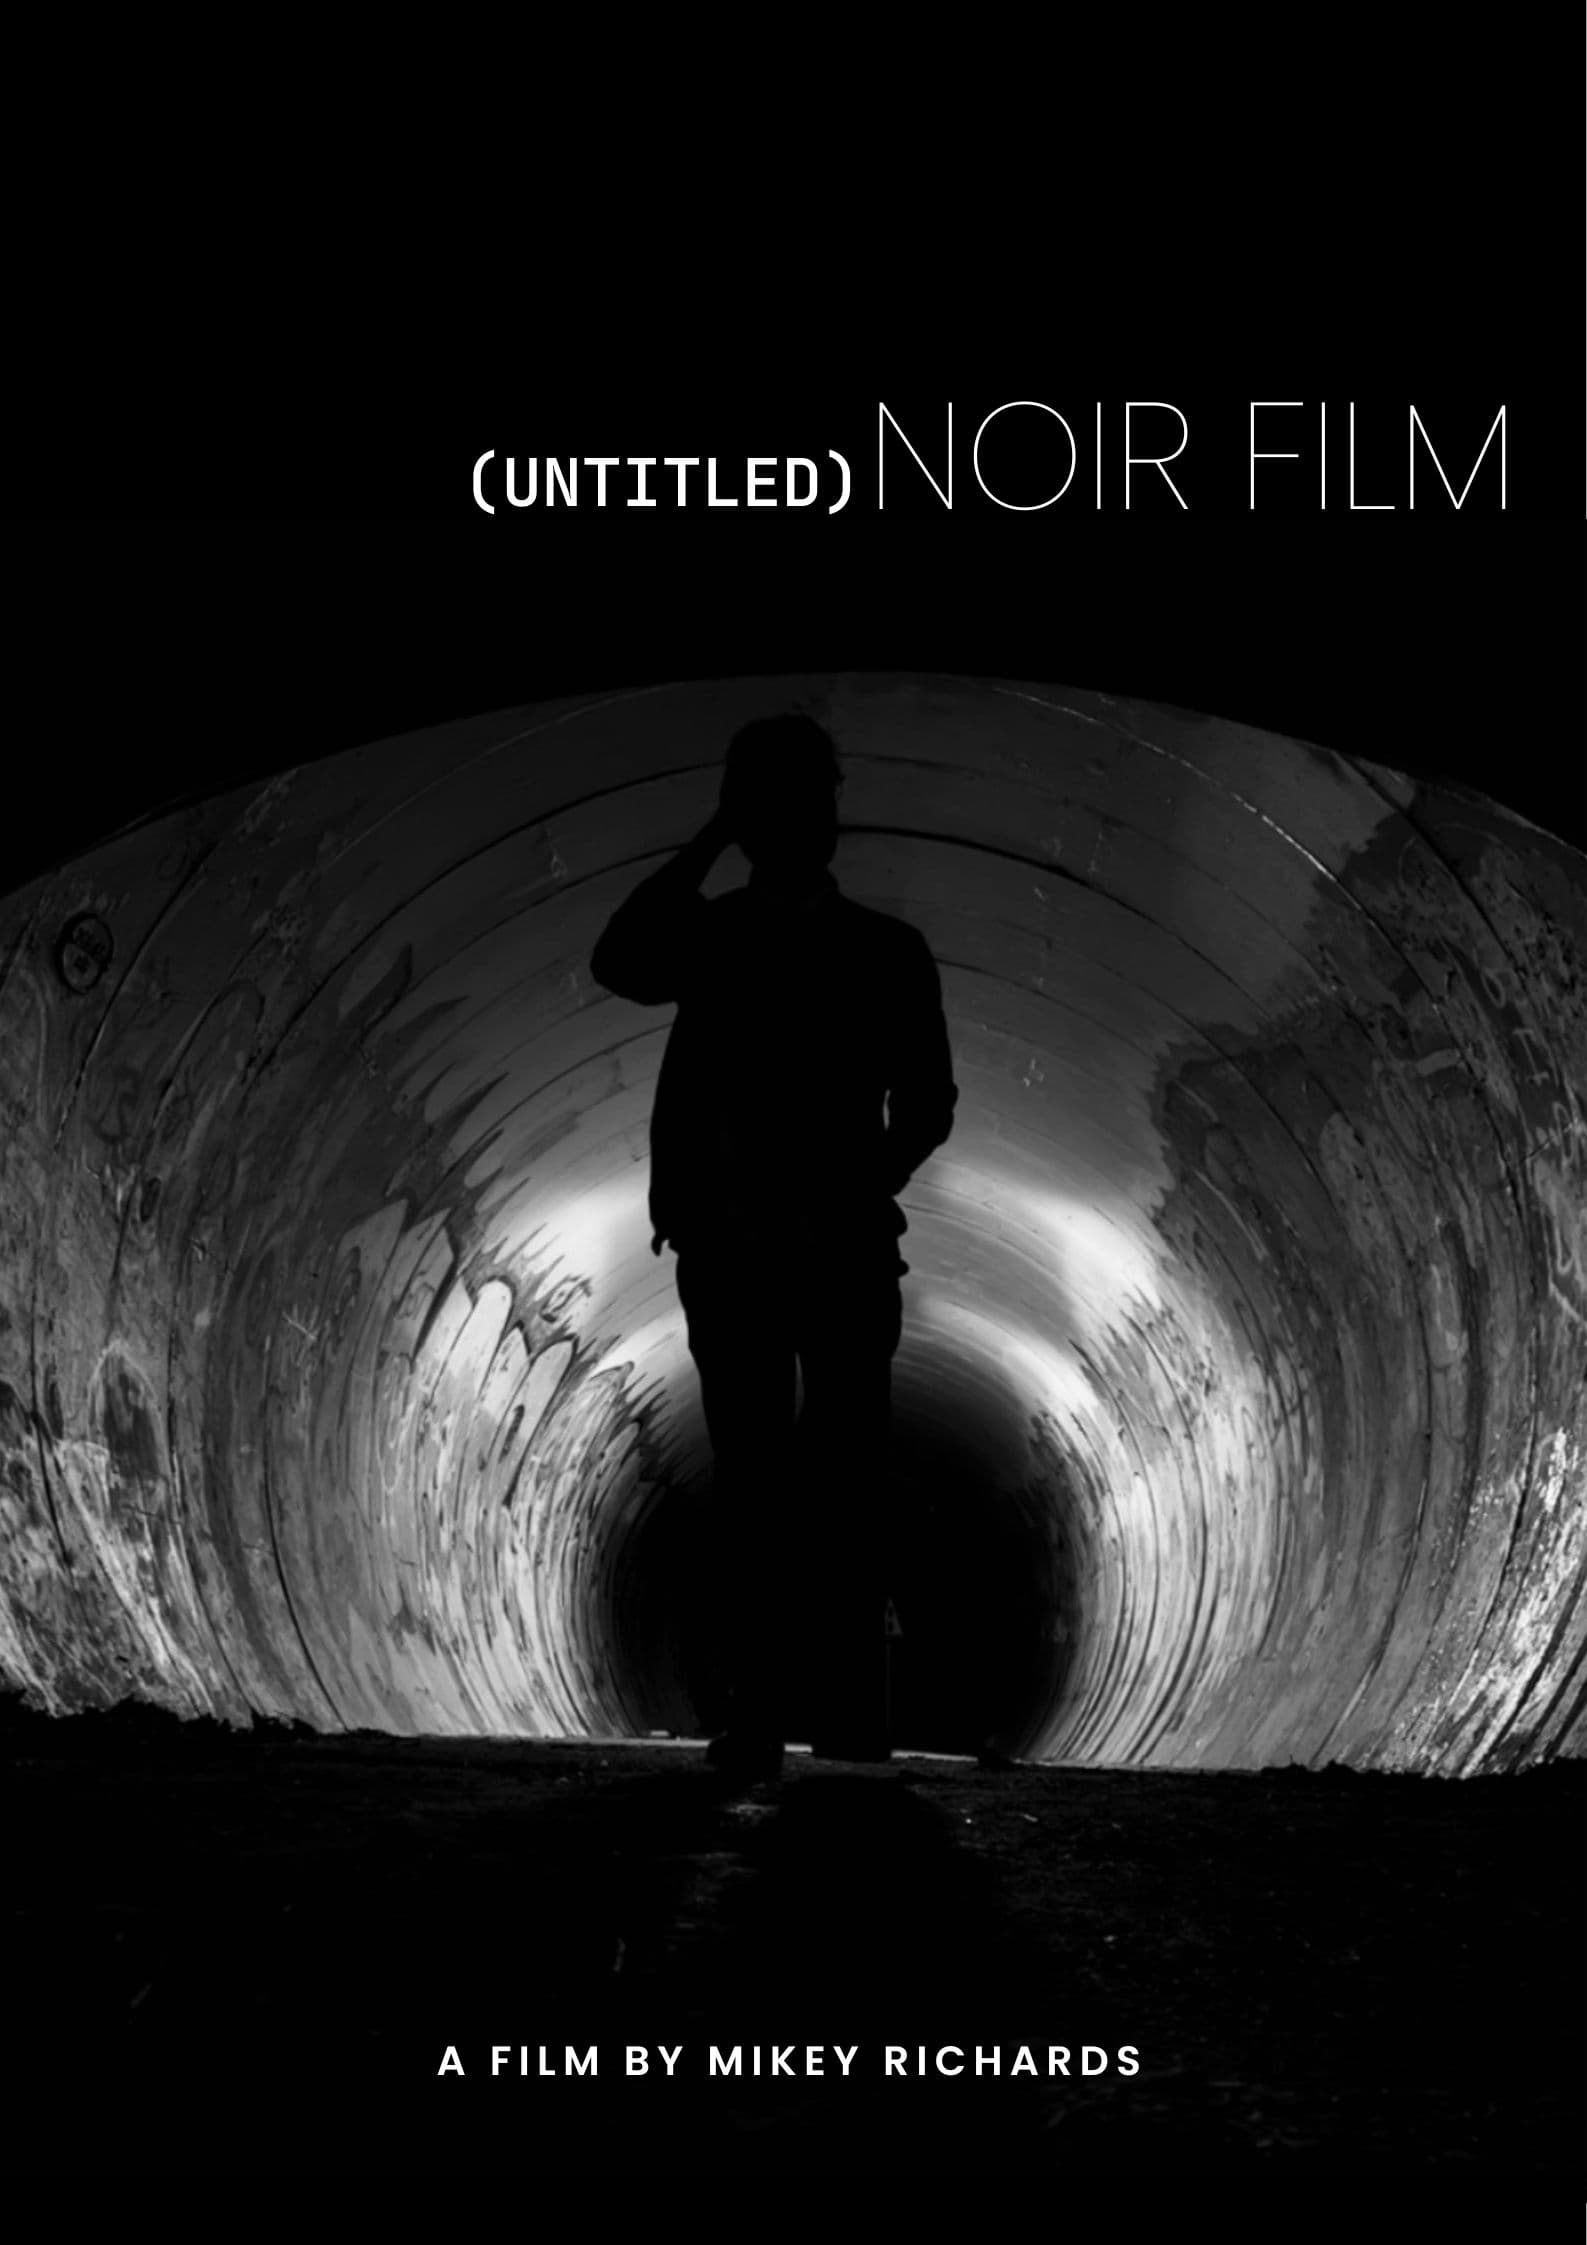 (Untitled) Noir Film